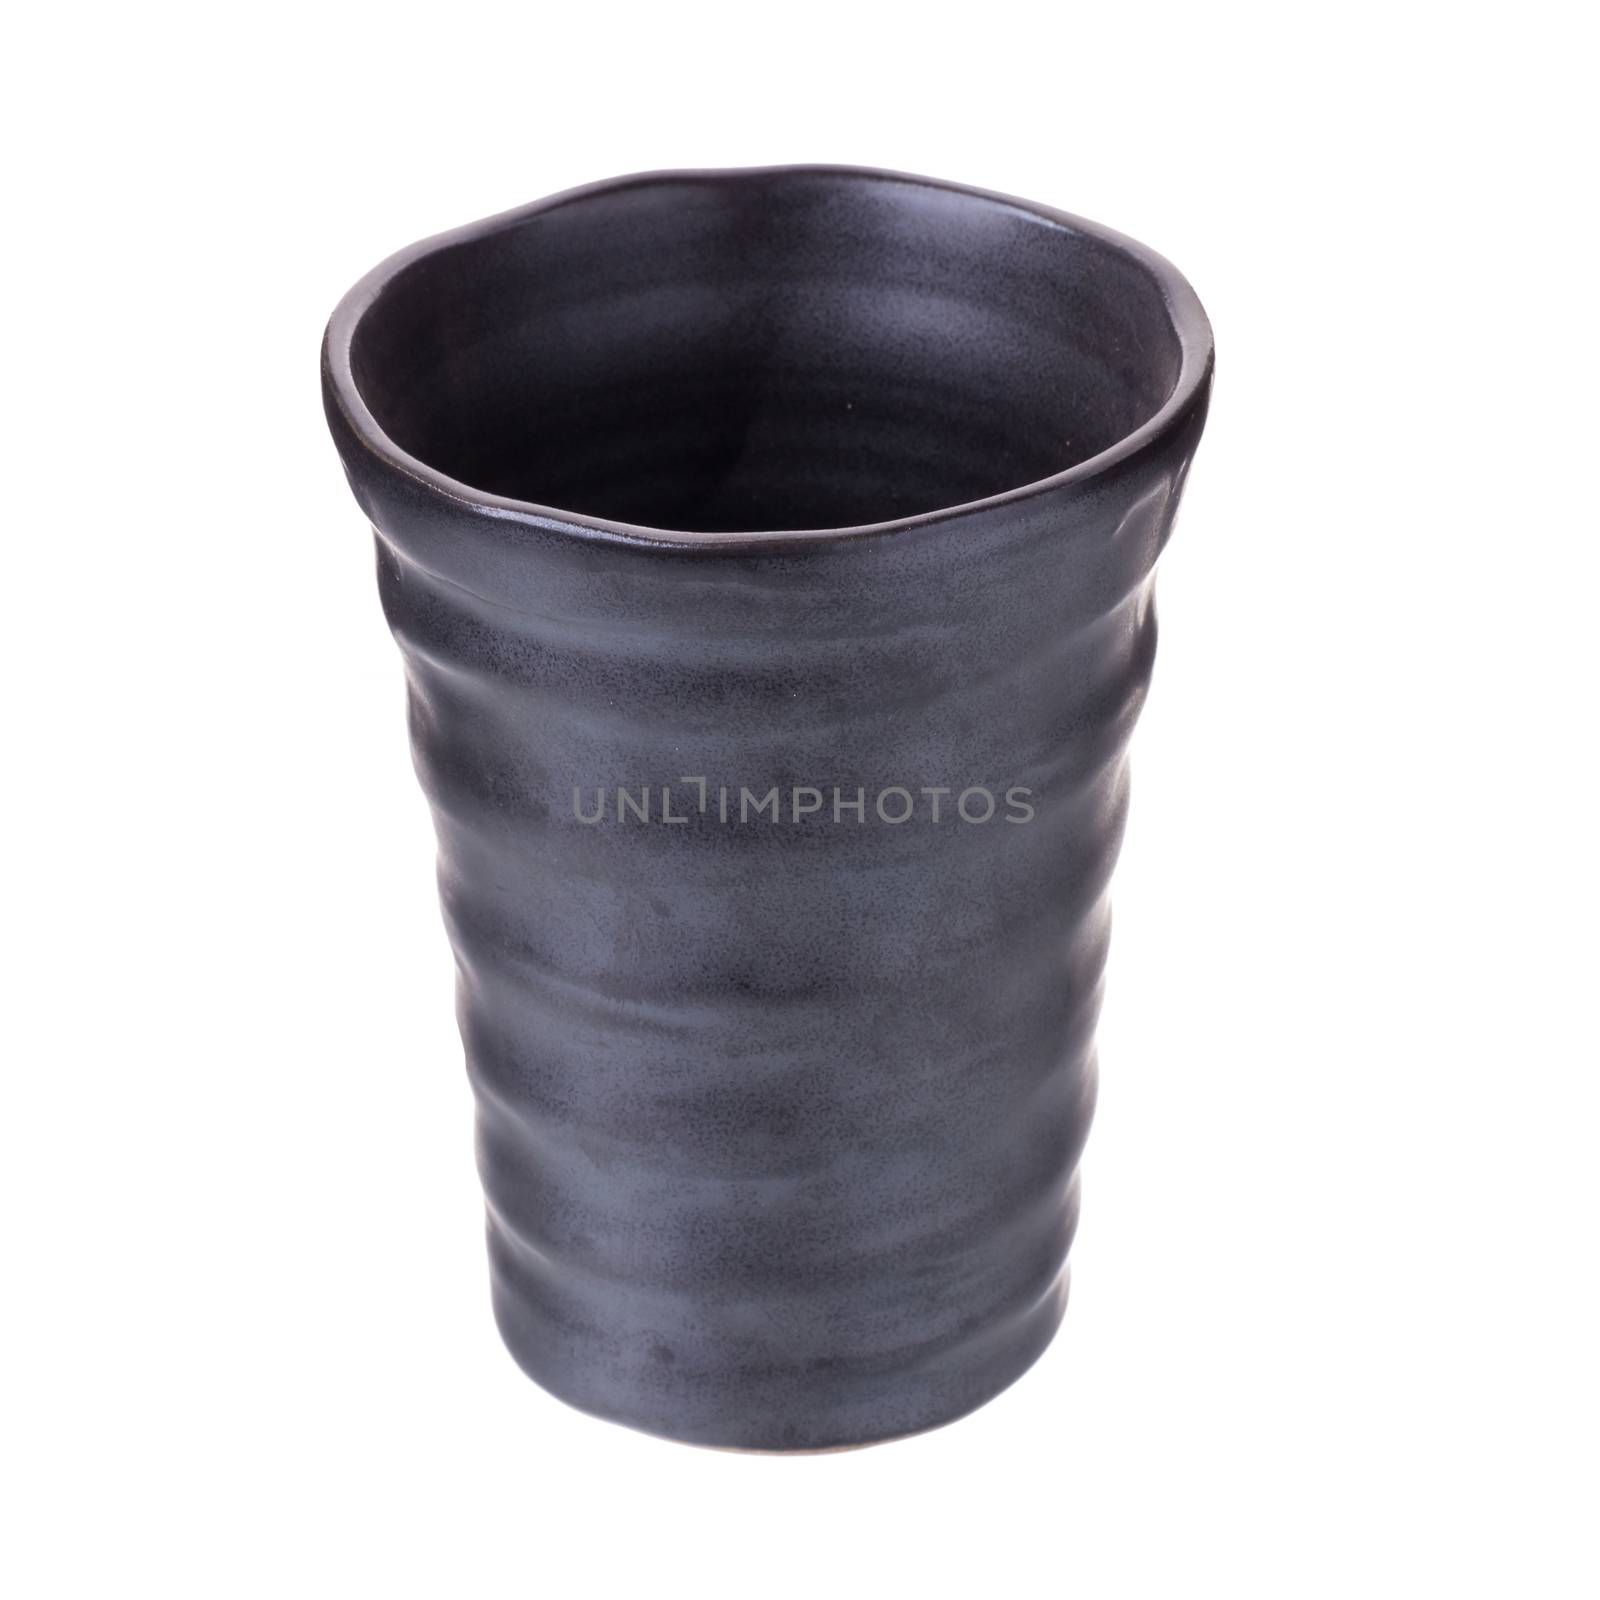 Glass ceramic black shape design wrinkly on white background by kaiskynet